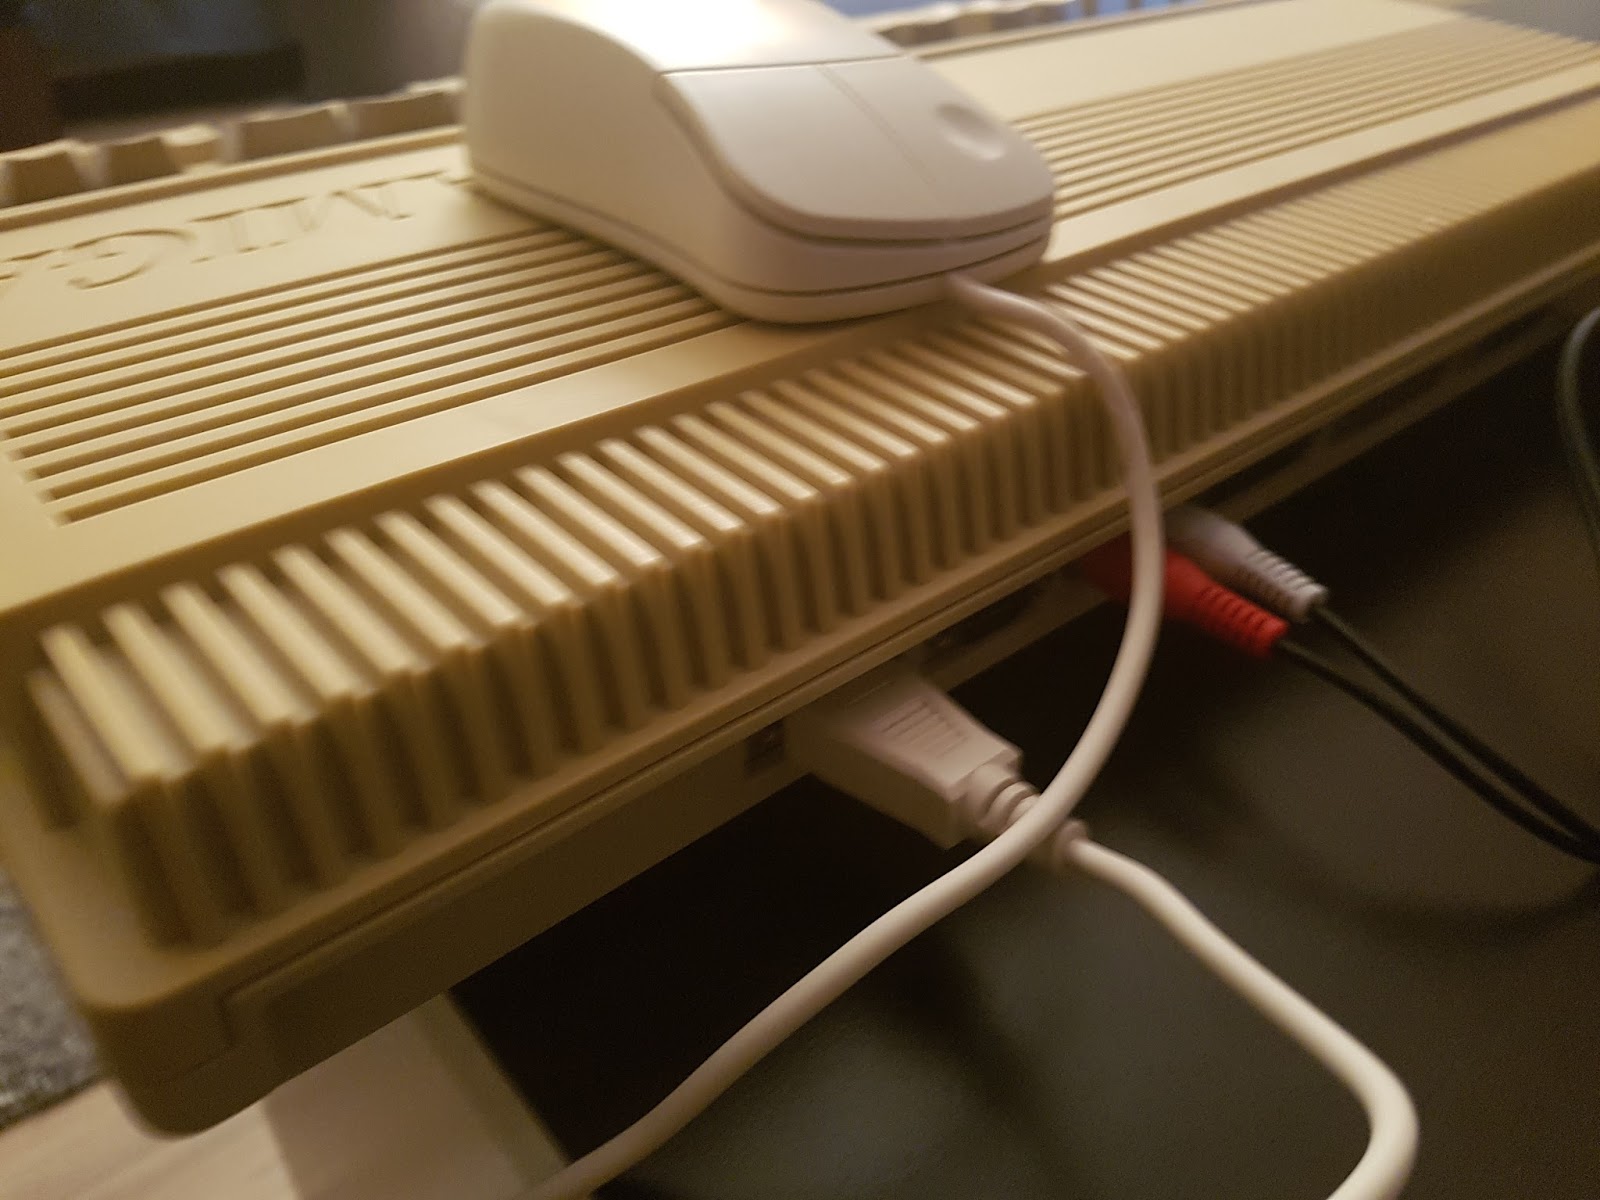 Hvetebolle: Amiga 500